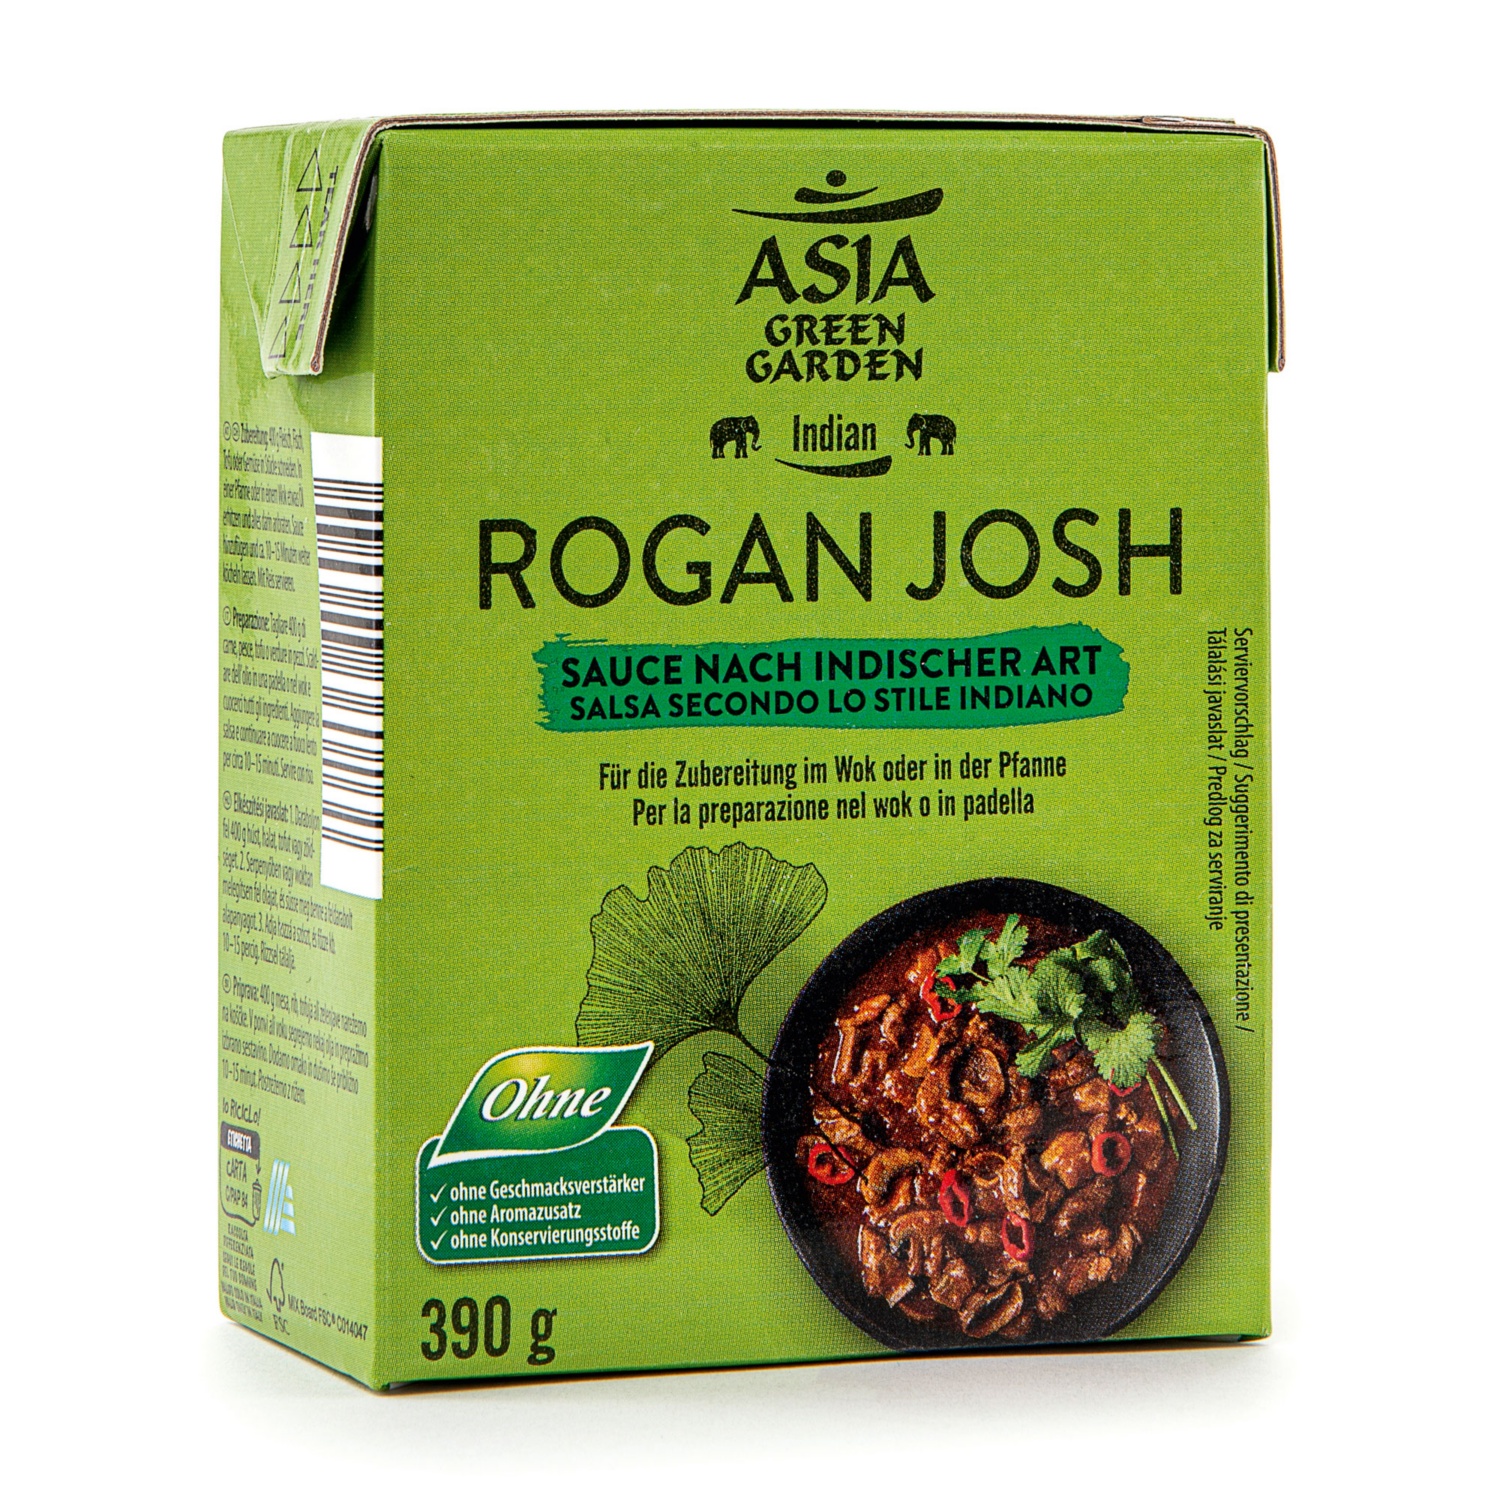 ASIA GREEN GARDEN Sauces indiennes, Rogan Josh